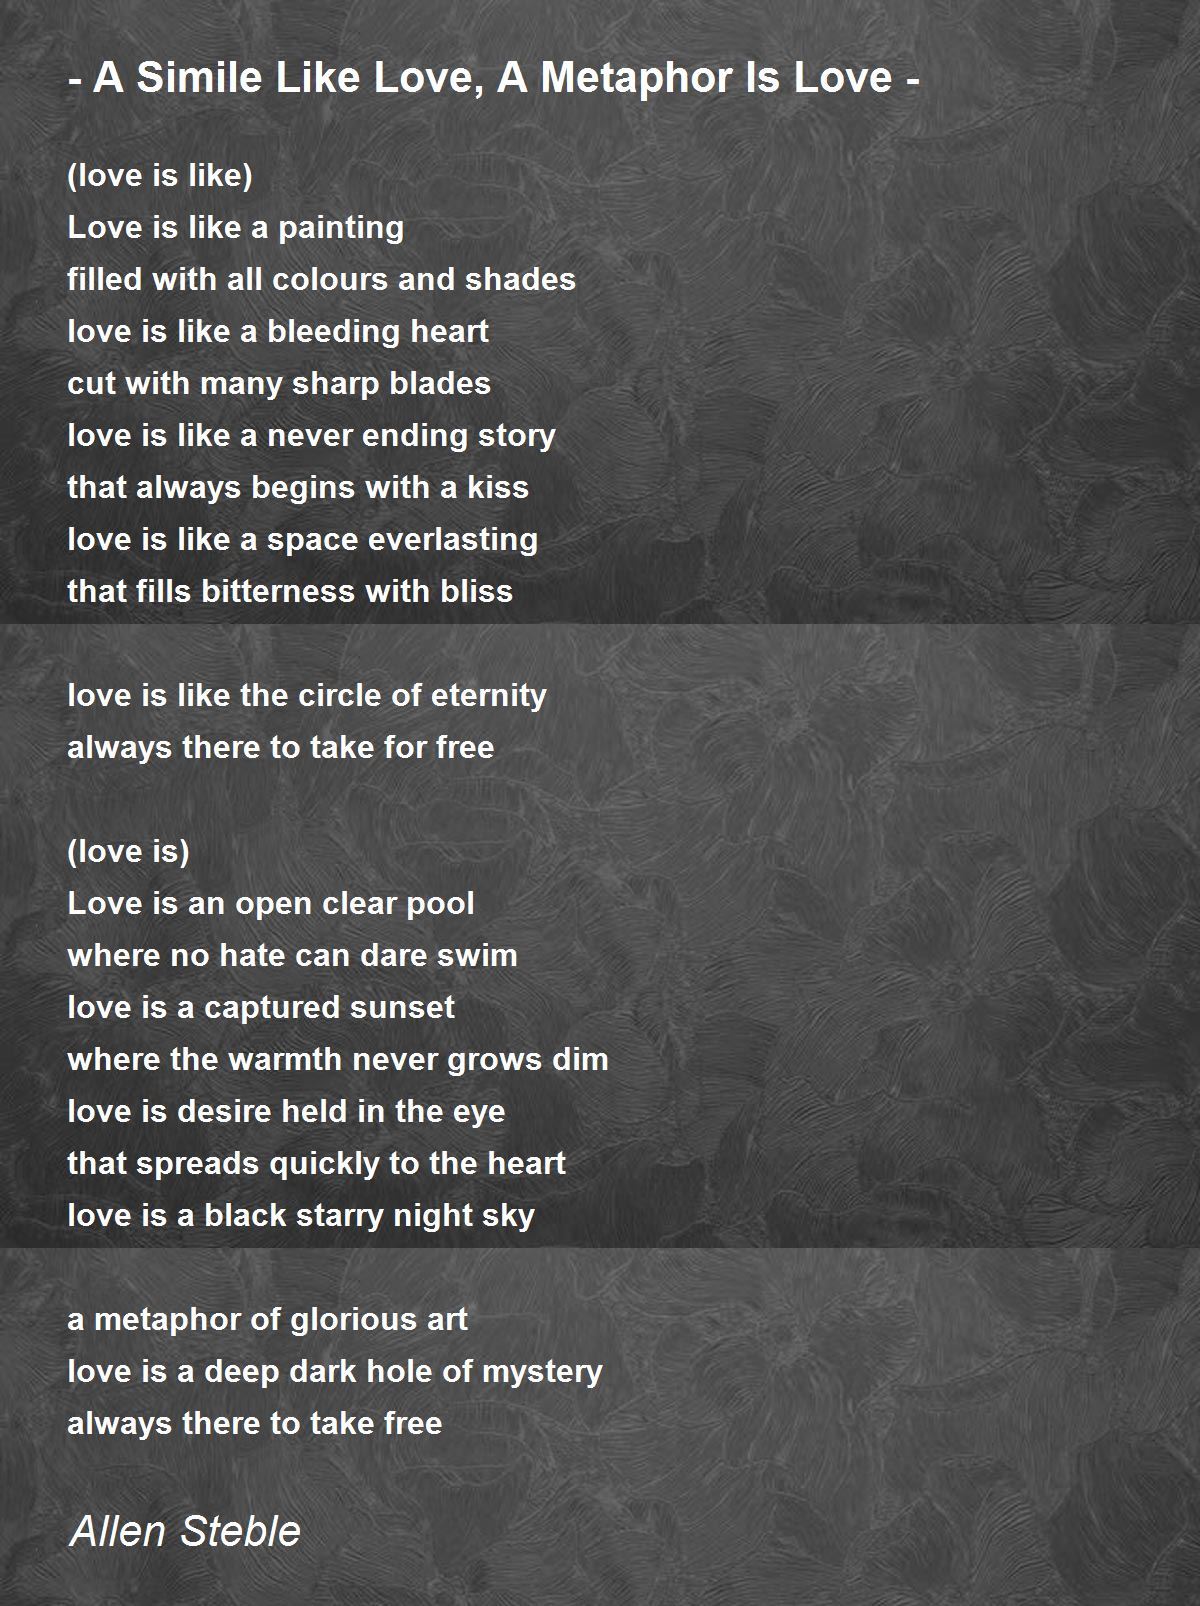 *(A Simile Like Love, A Metaphor Is Love) * Poem by Allen Steble - Poem